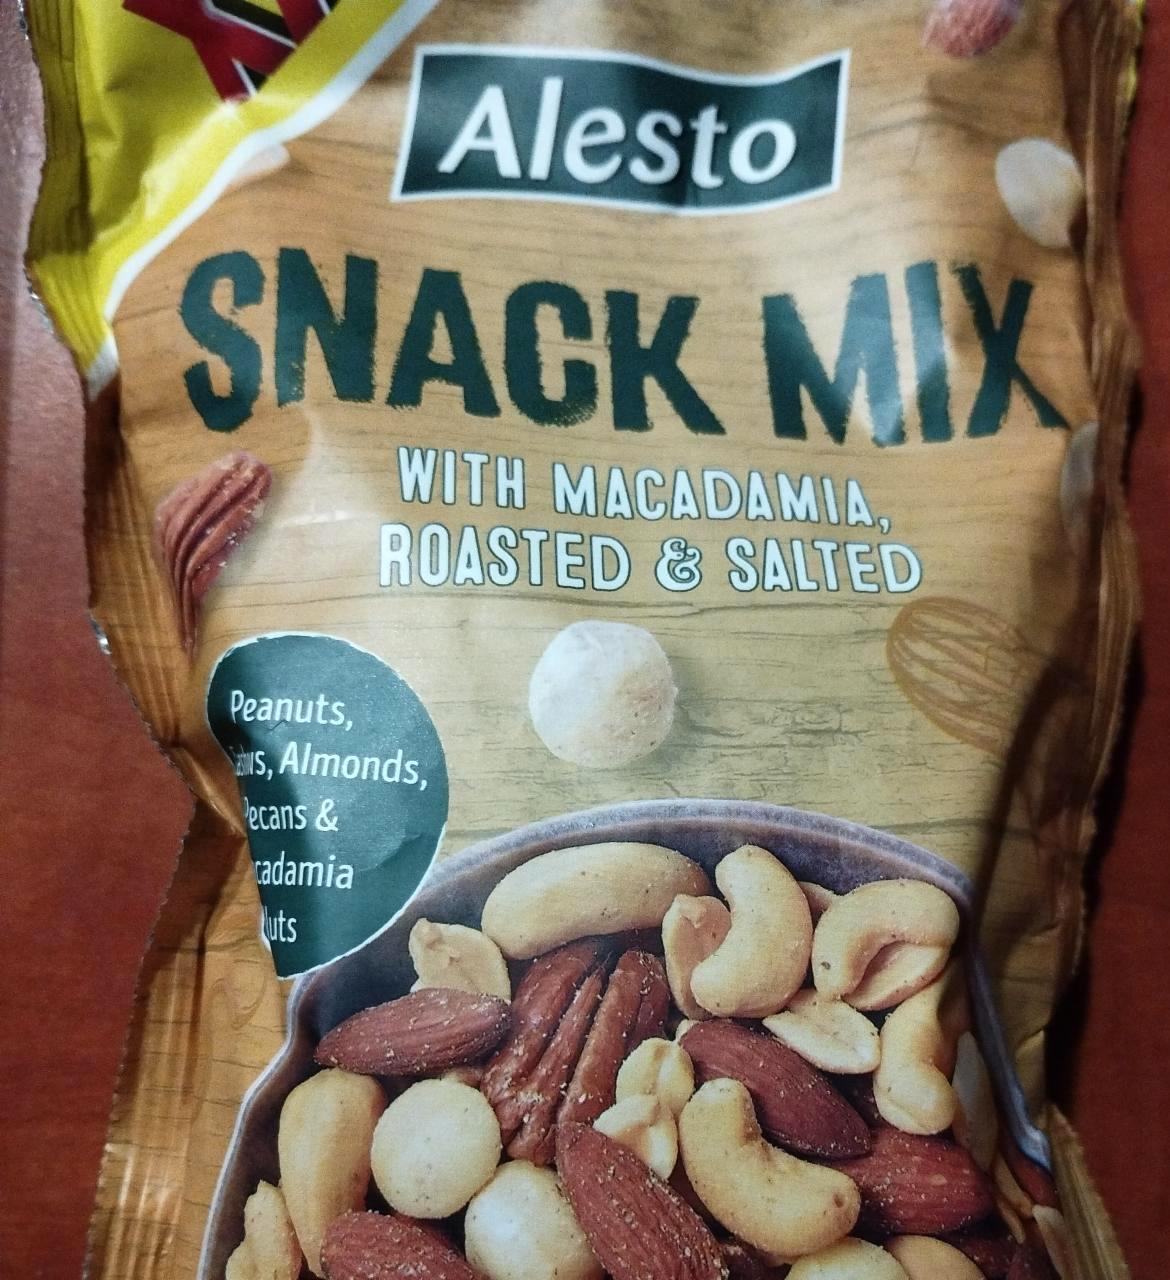 Képek - Snack mix with macadamia, roasted & salted Alesto